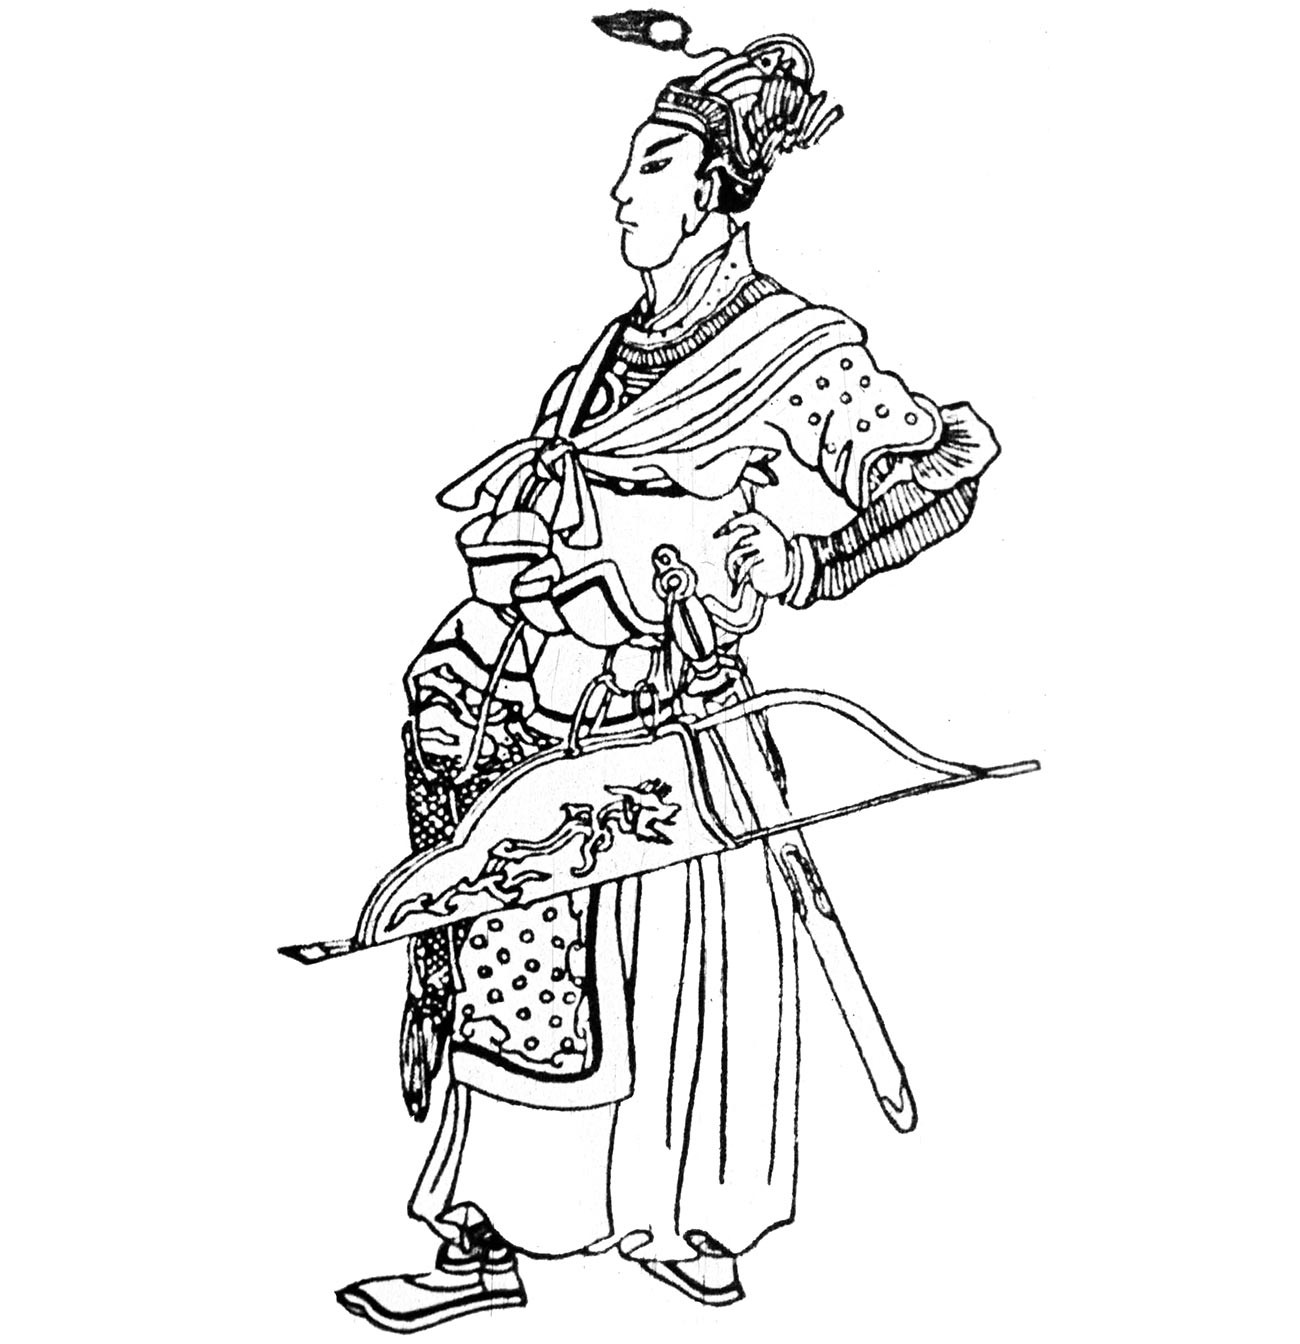 Бату-кан. Средњовековни кинески цртеж.